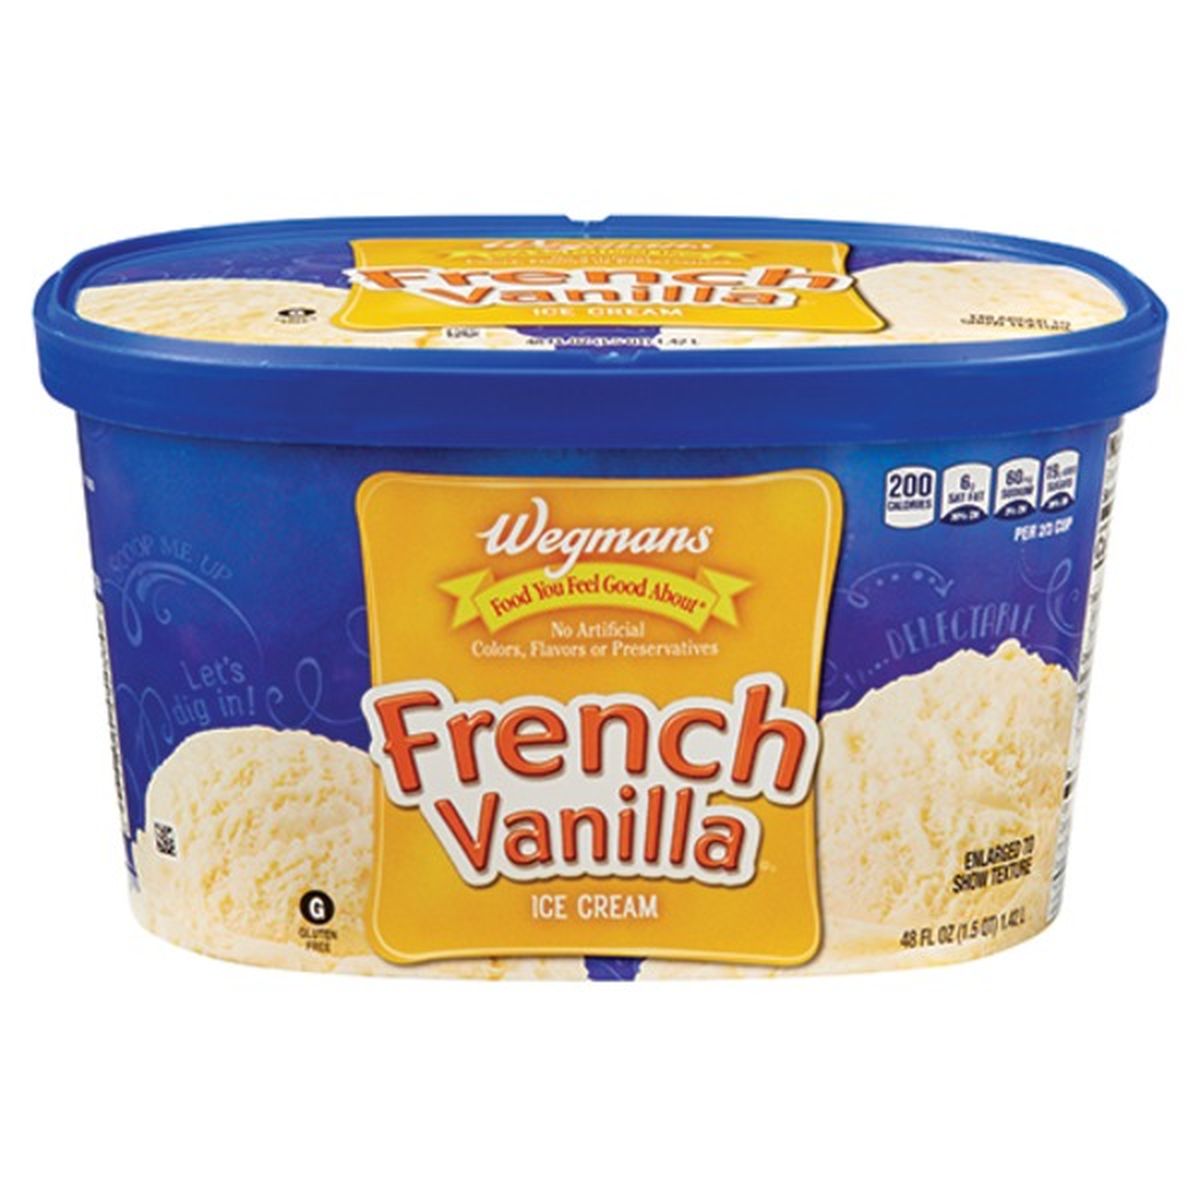 Calories in Wegmans French Vanilla Ice Cream